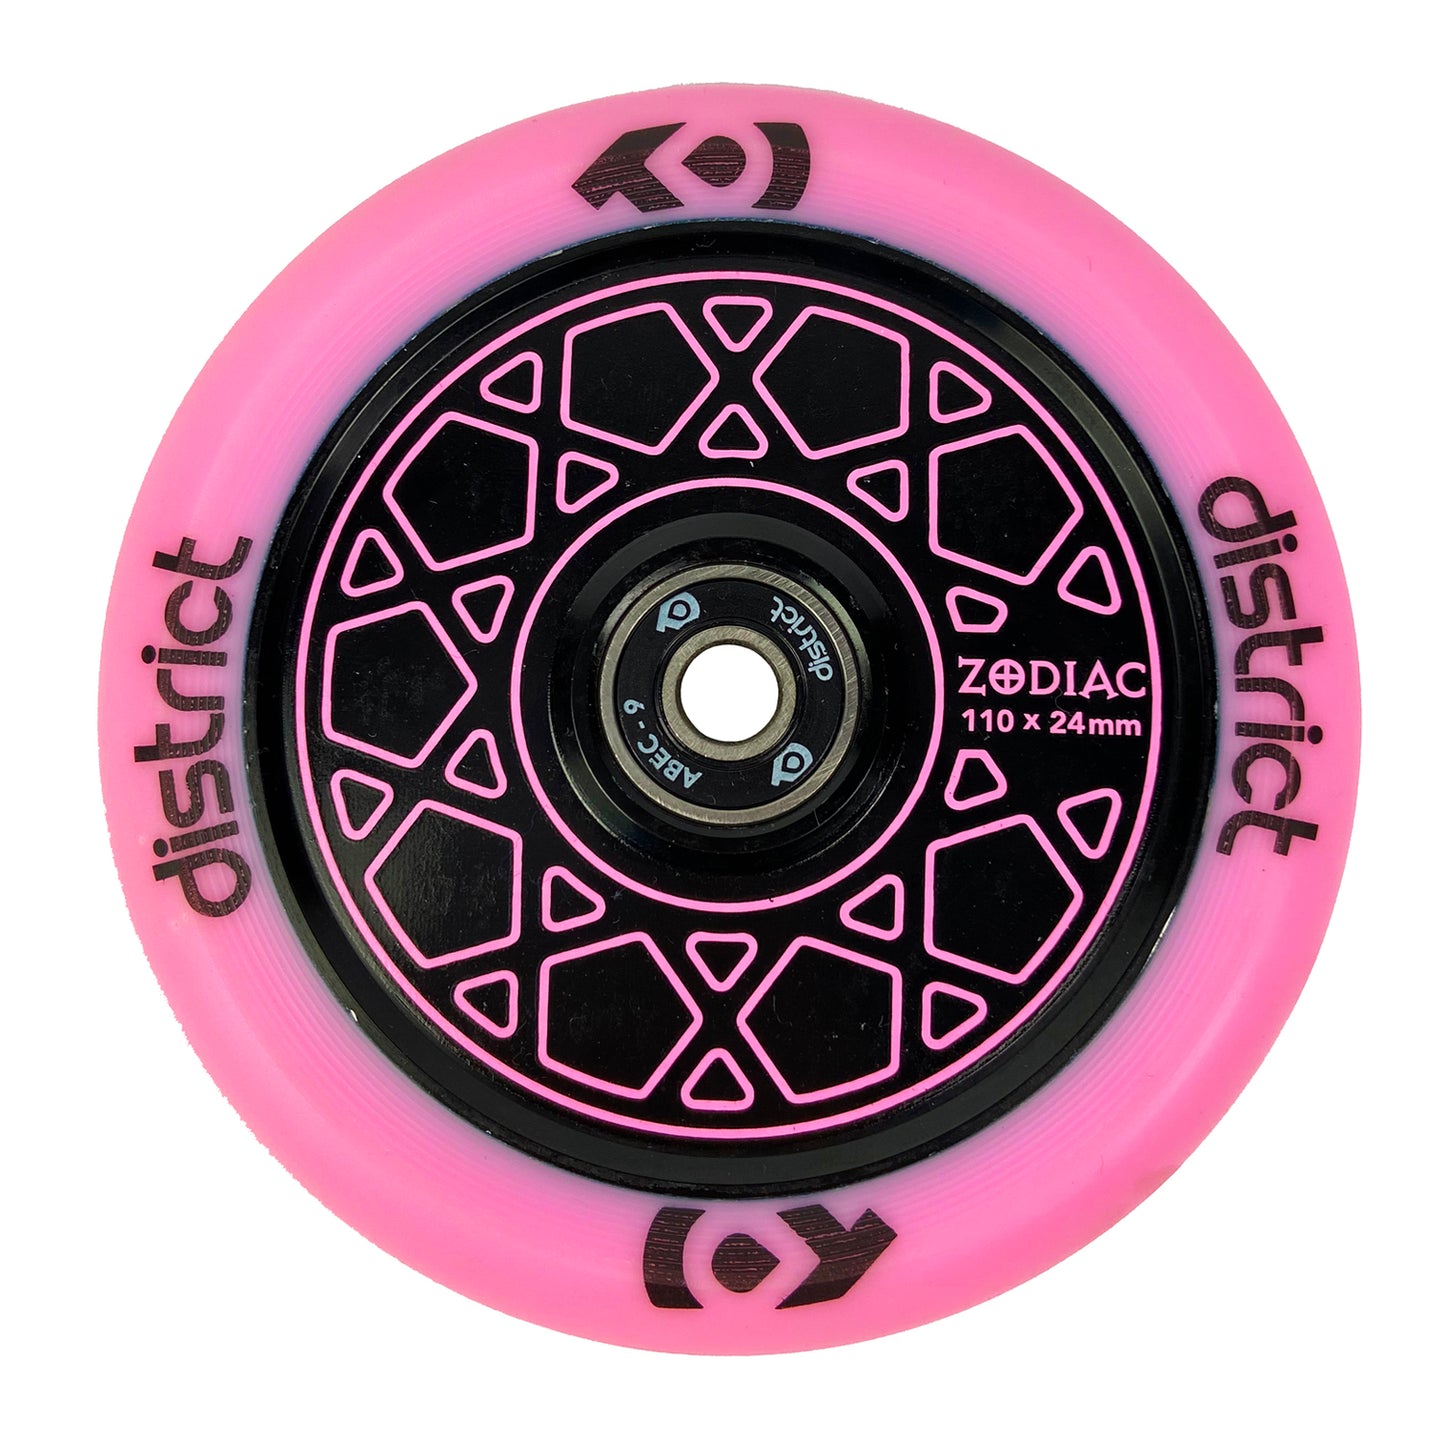 District Zodiac Wheel 110mm - Pink / Black - Prime Delux Store